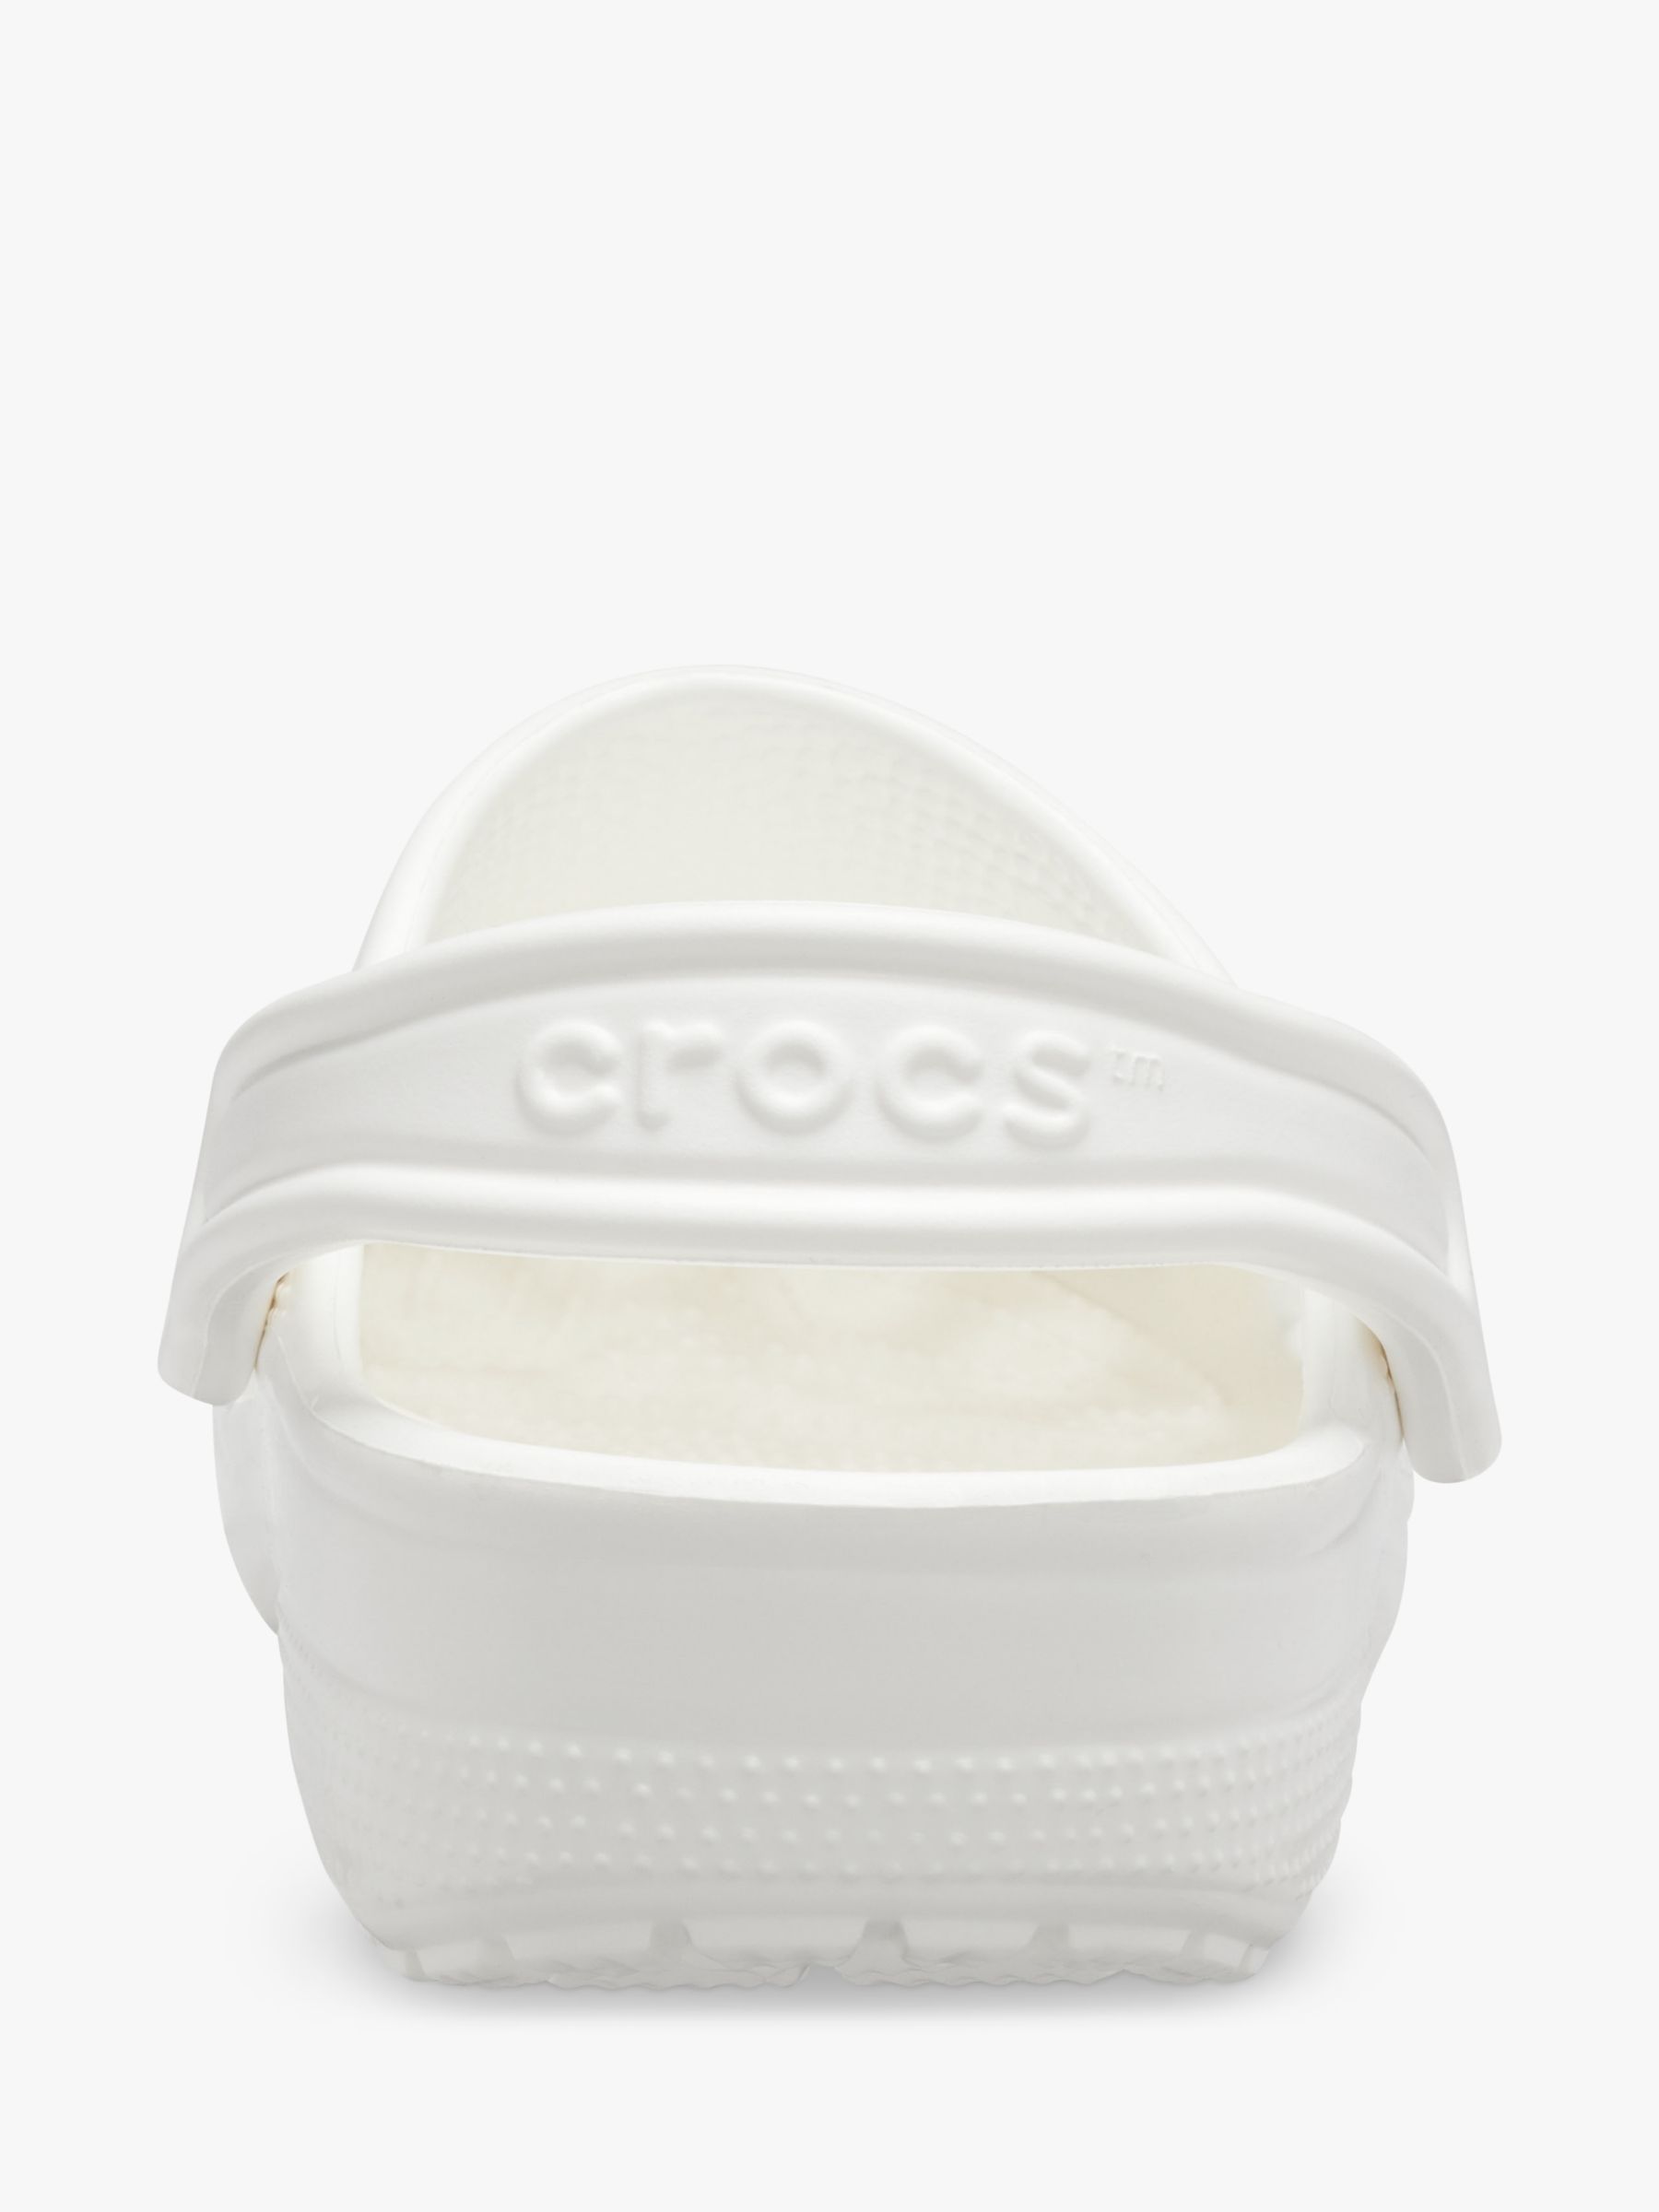 Crocs Classic Clogs, White, 7